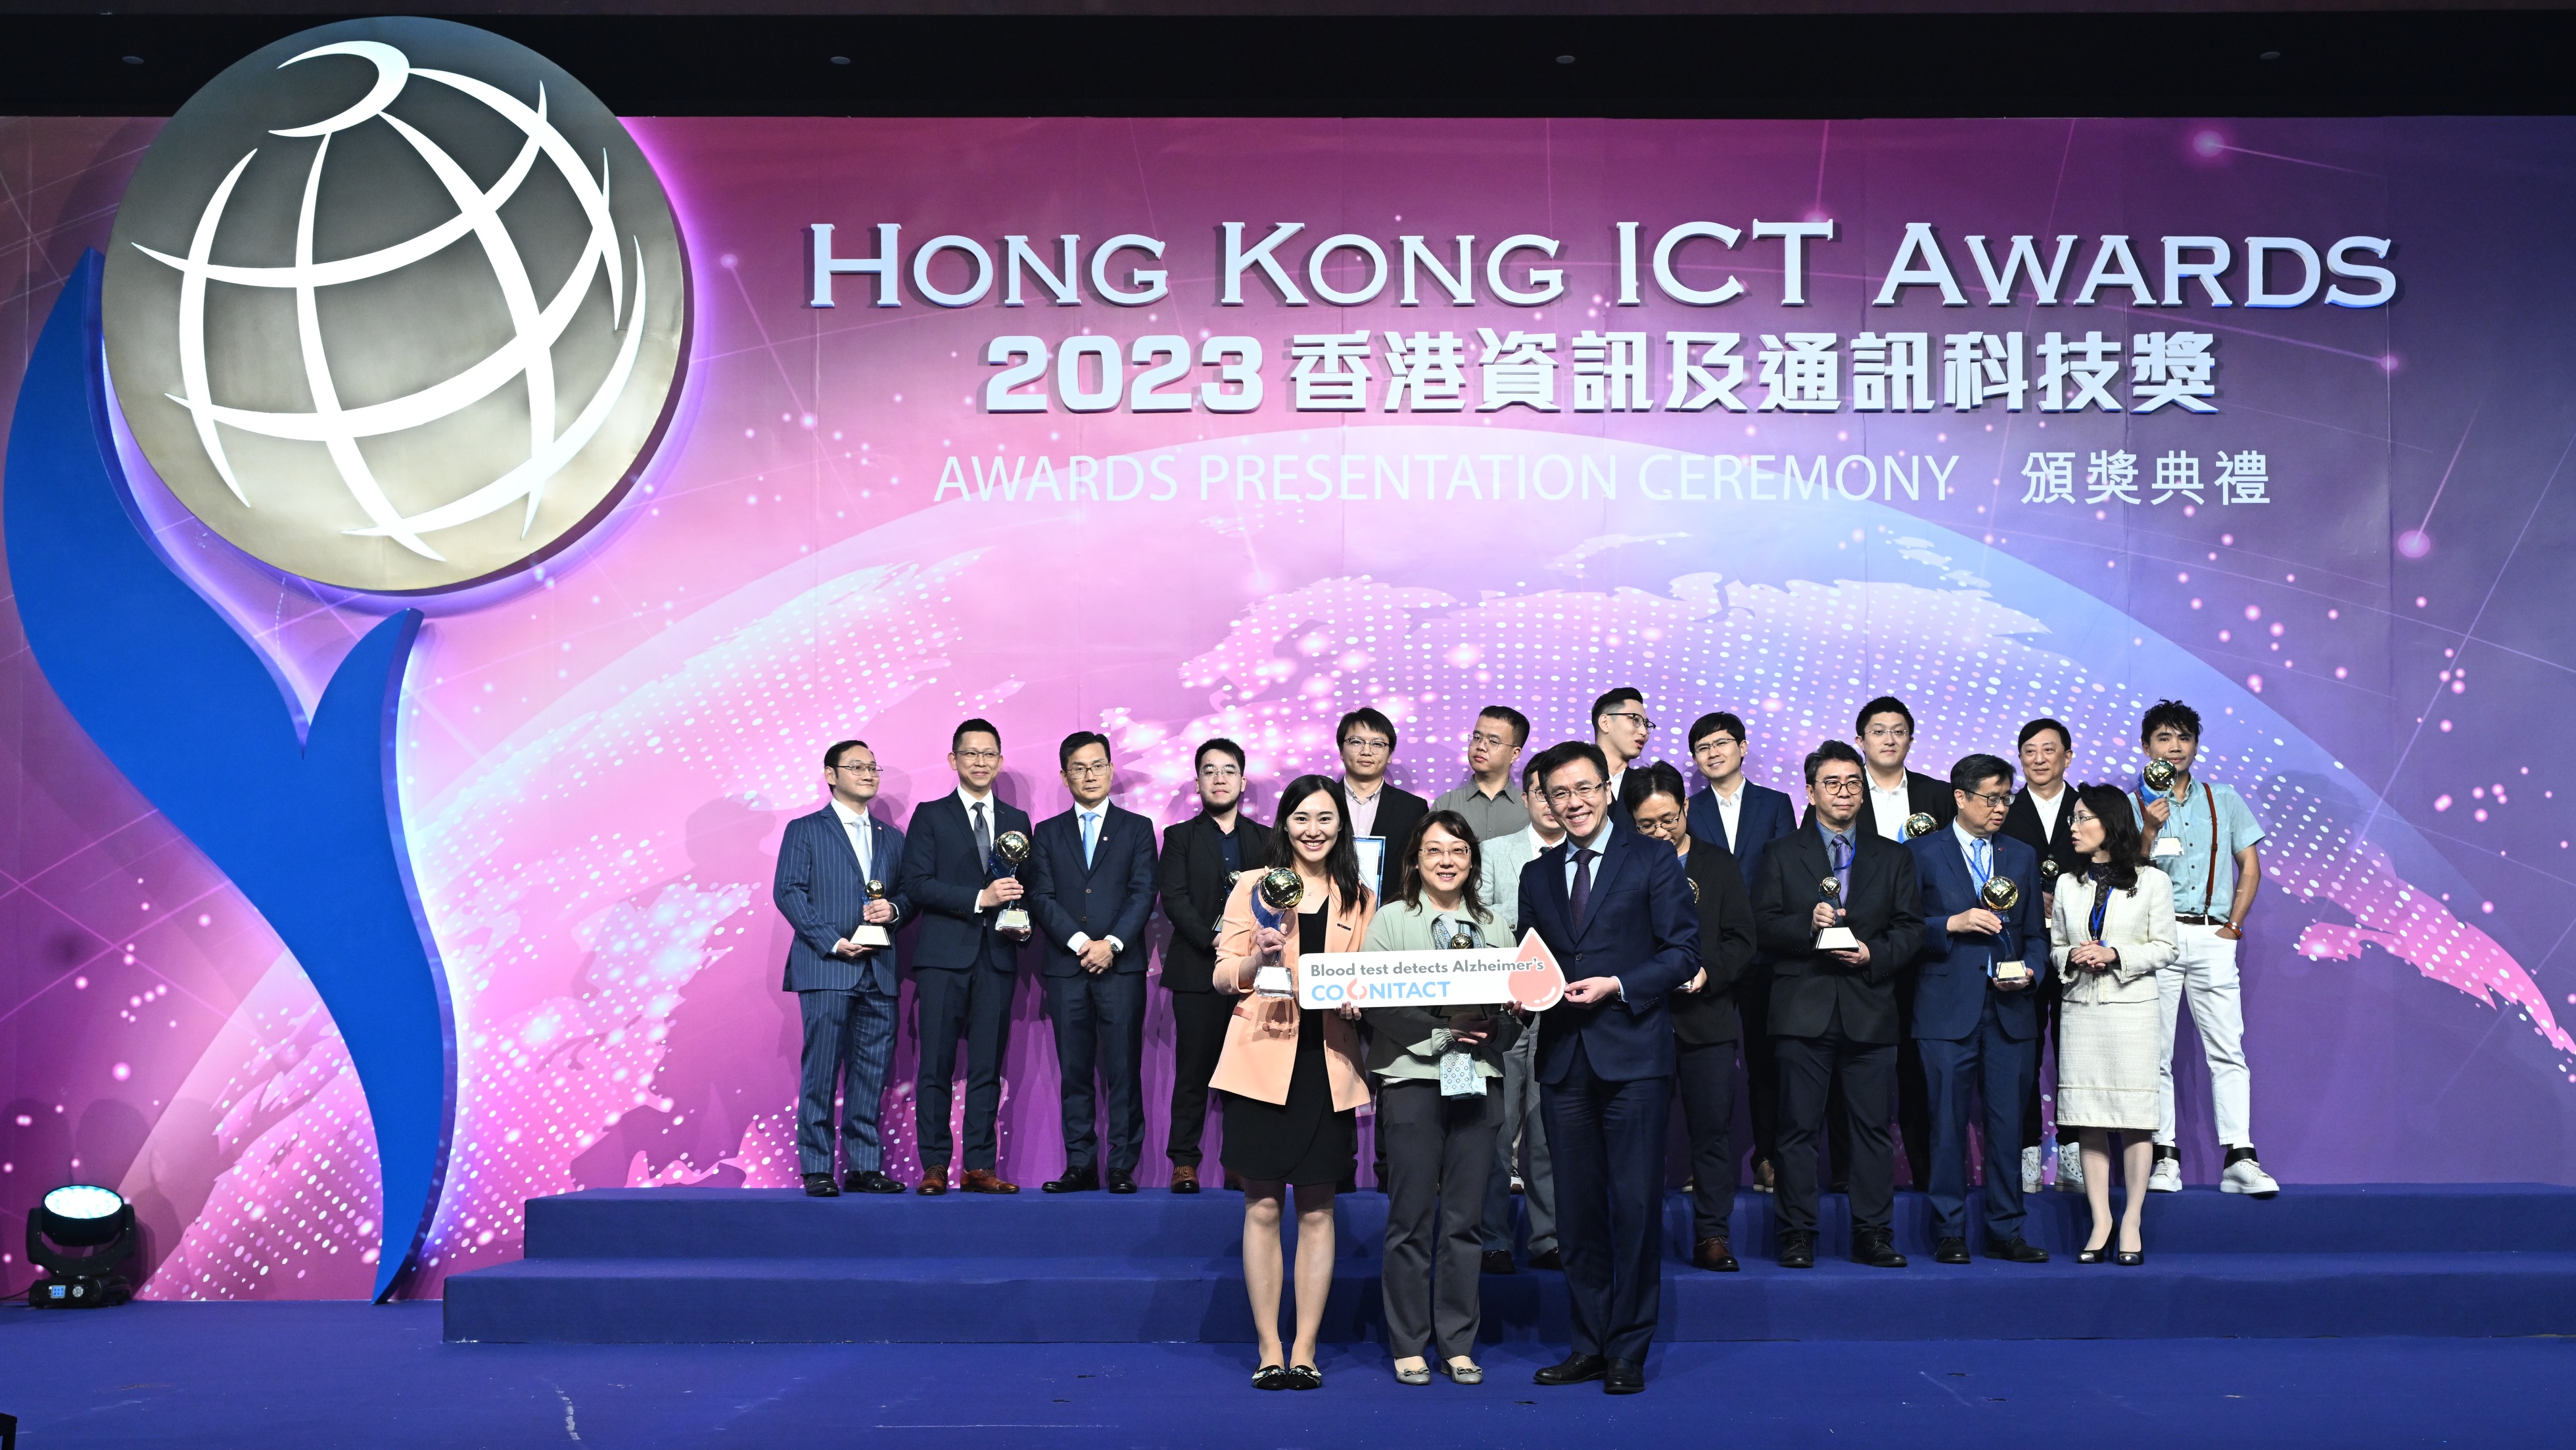 Hong Kong ICT Awards 2023 Smart People Grand Award Winner